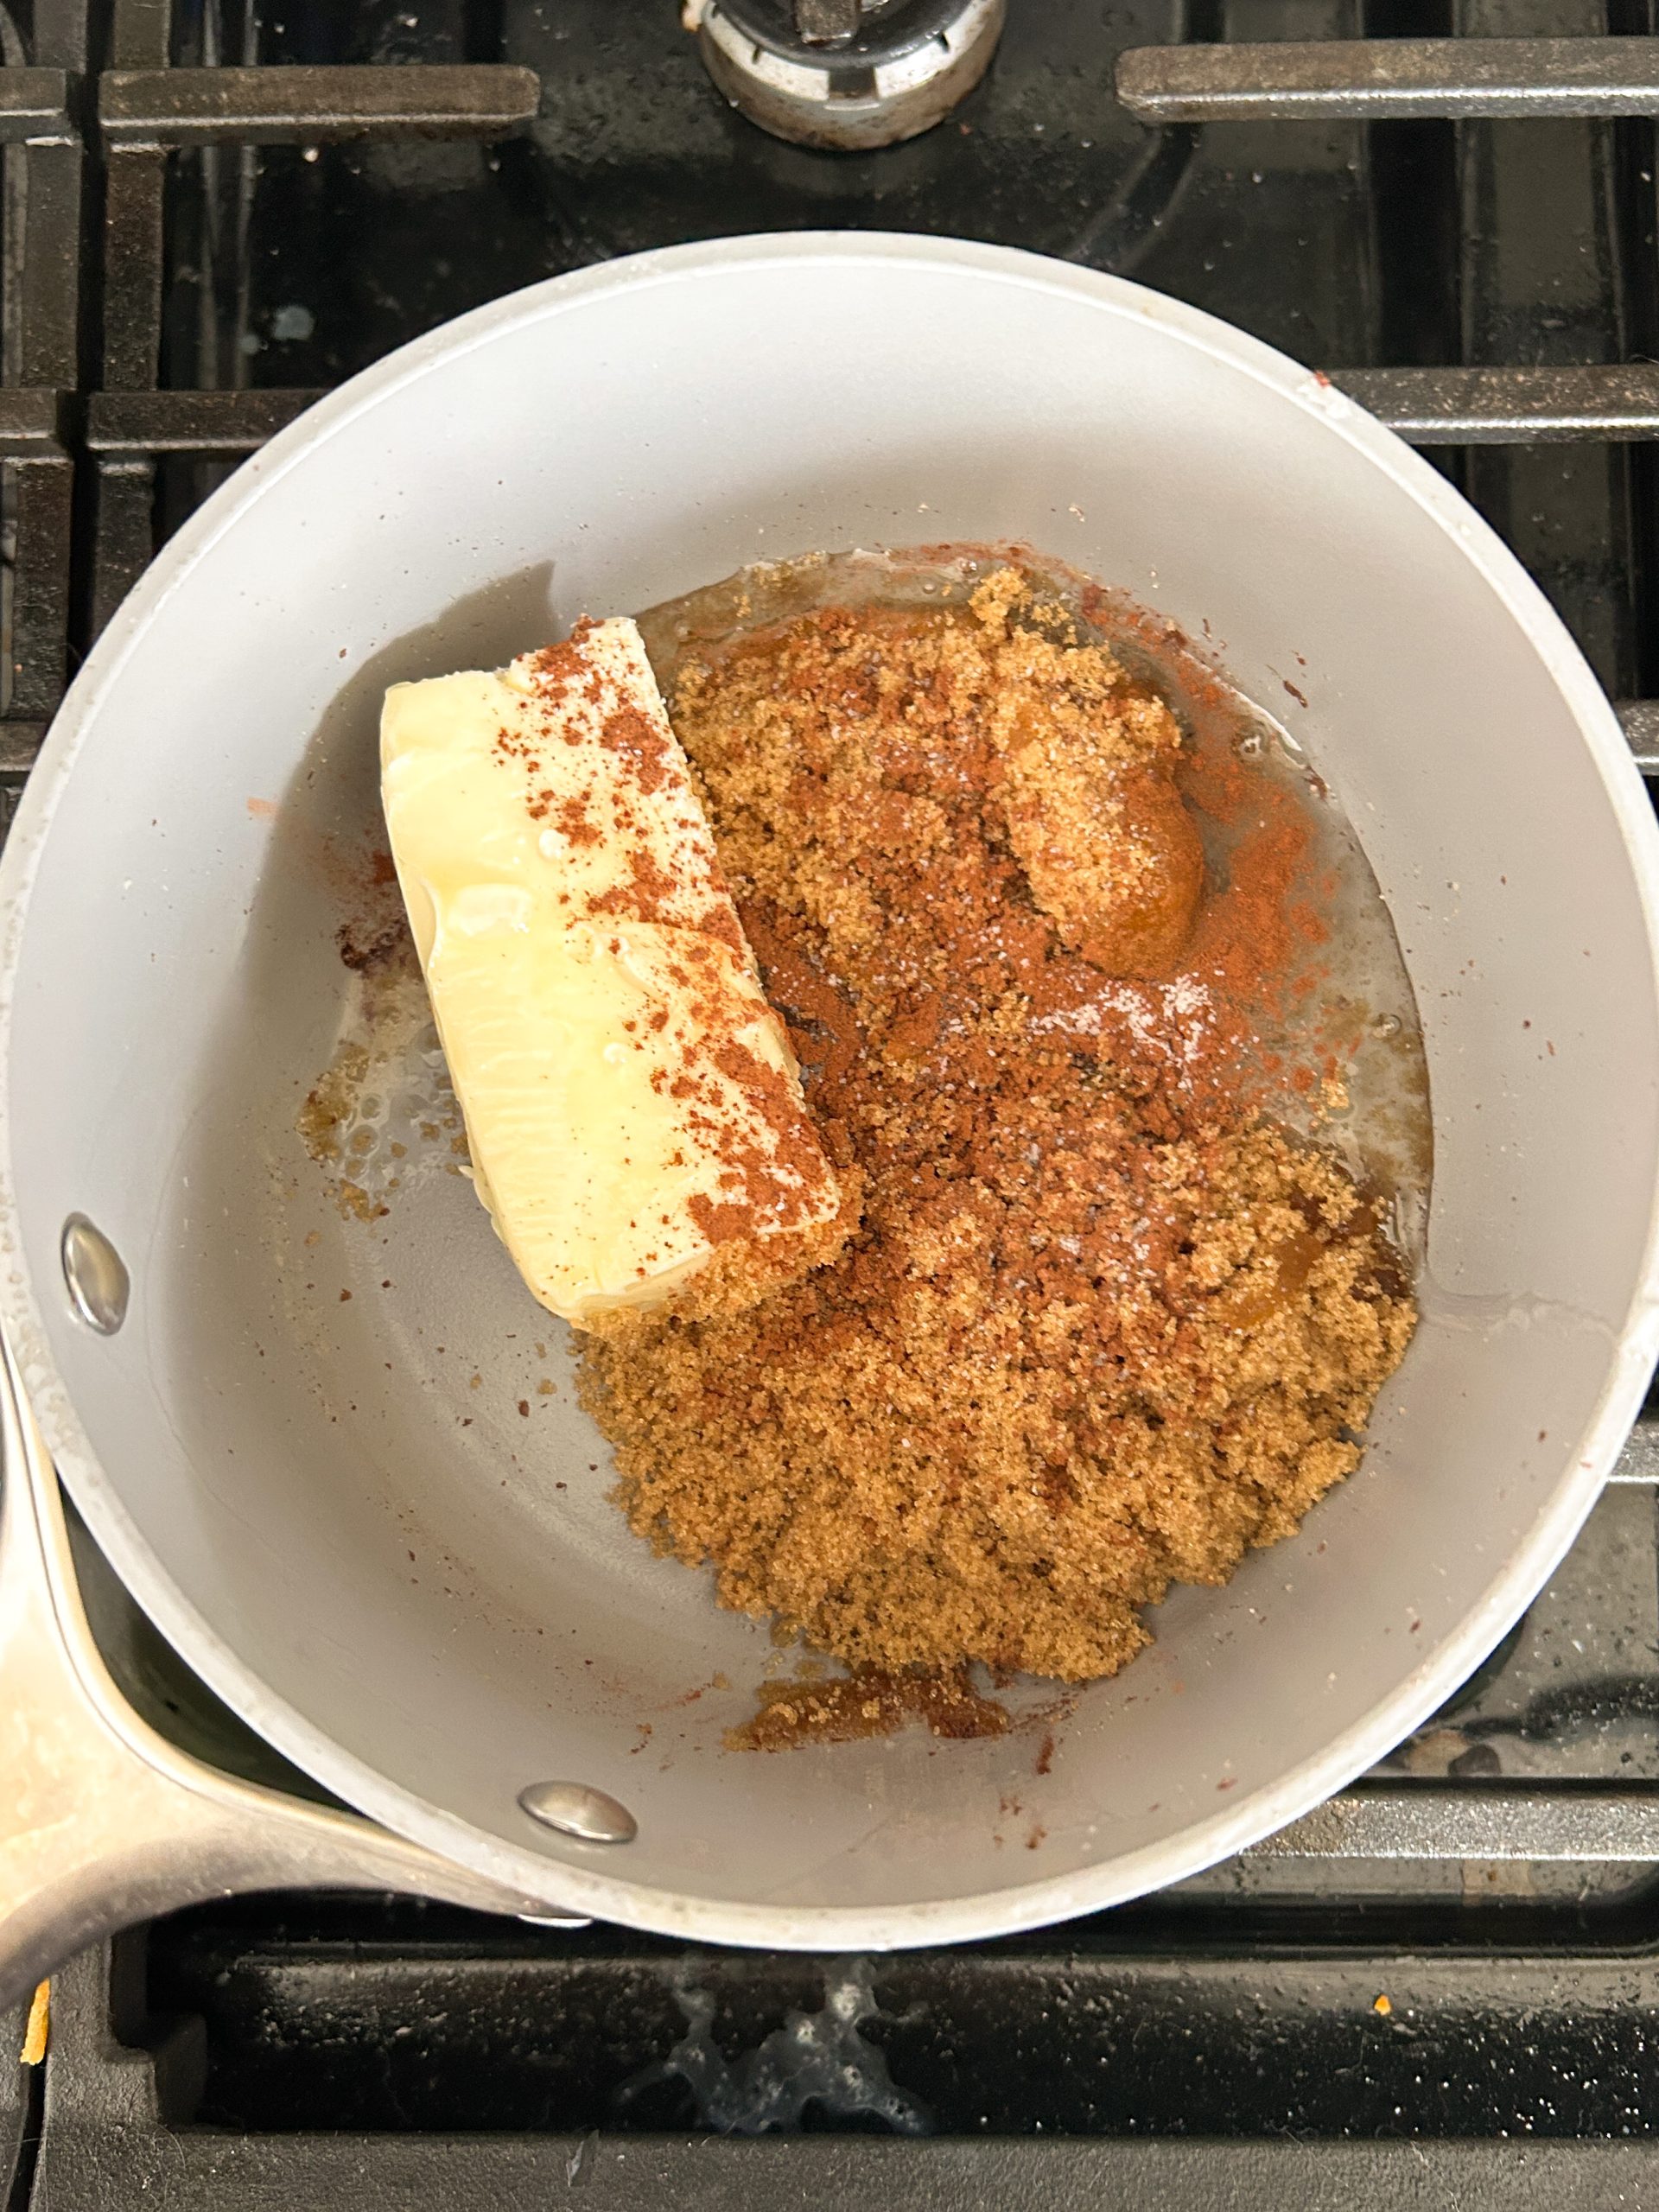 process of making brown sugar caramel in a nonstick pan